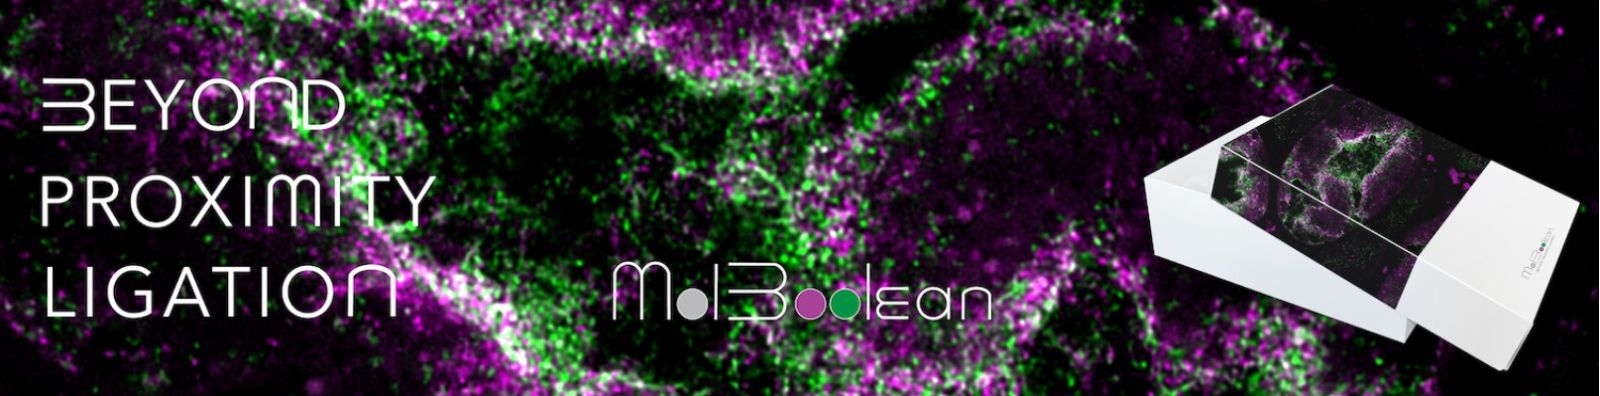 MolBoolean - Beyond Proximity Ligation